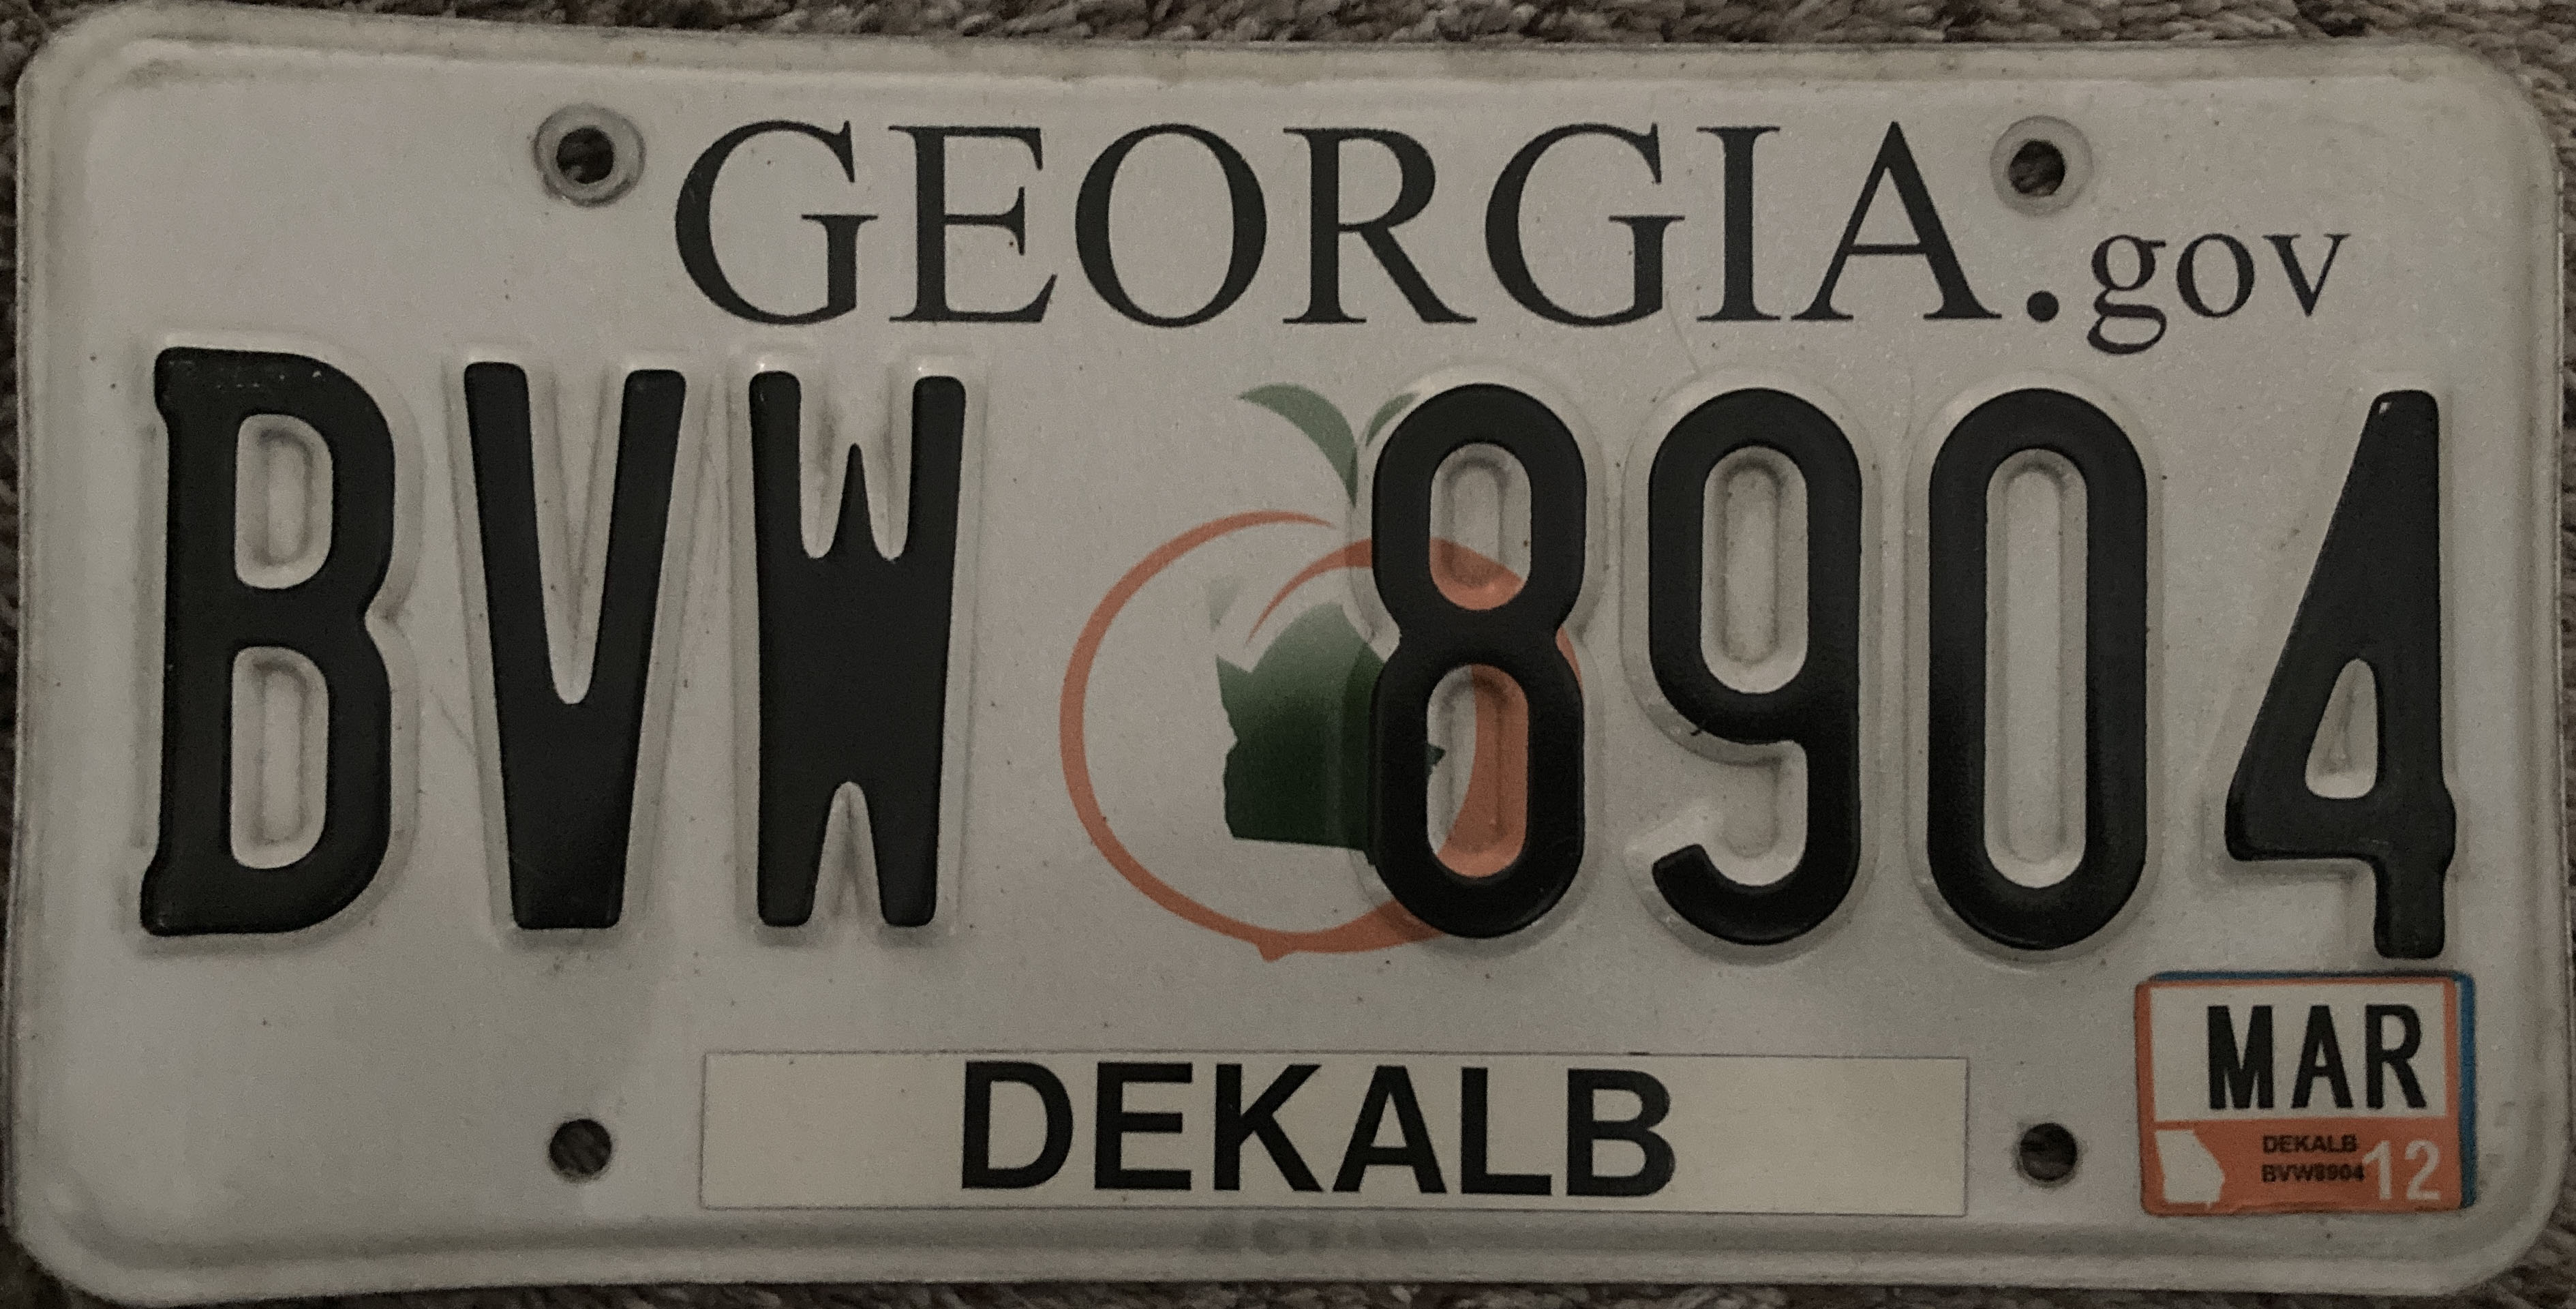 2007 Georgia US Plate